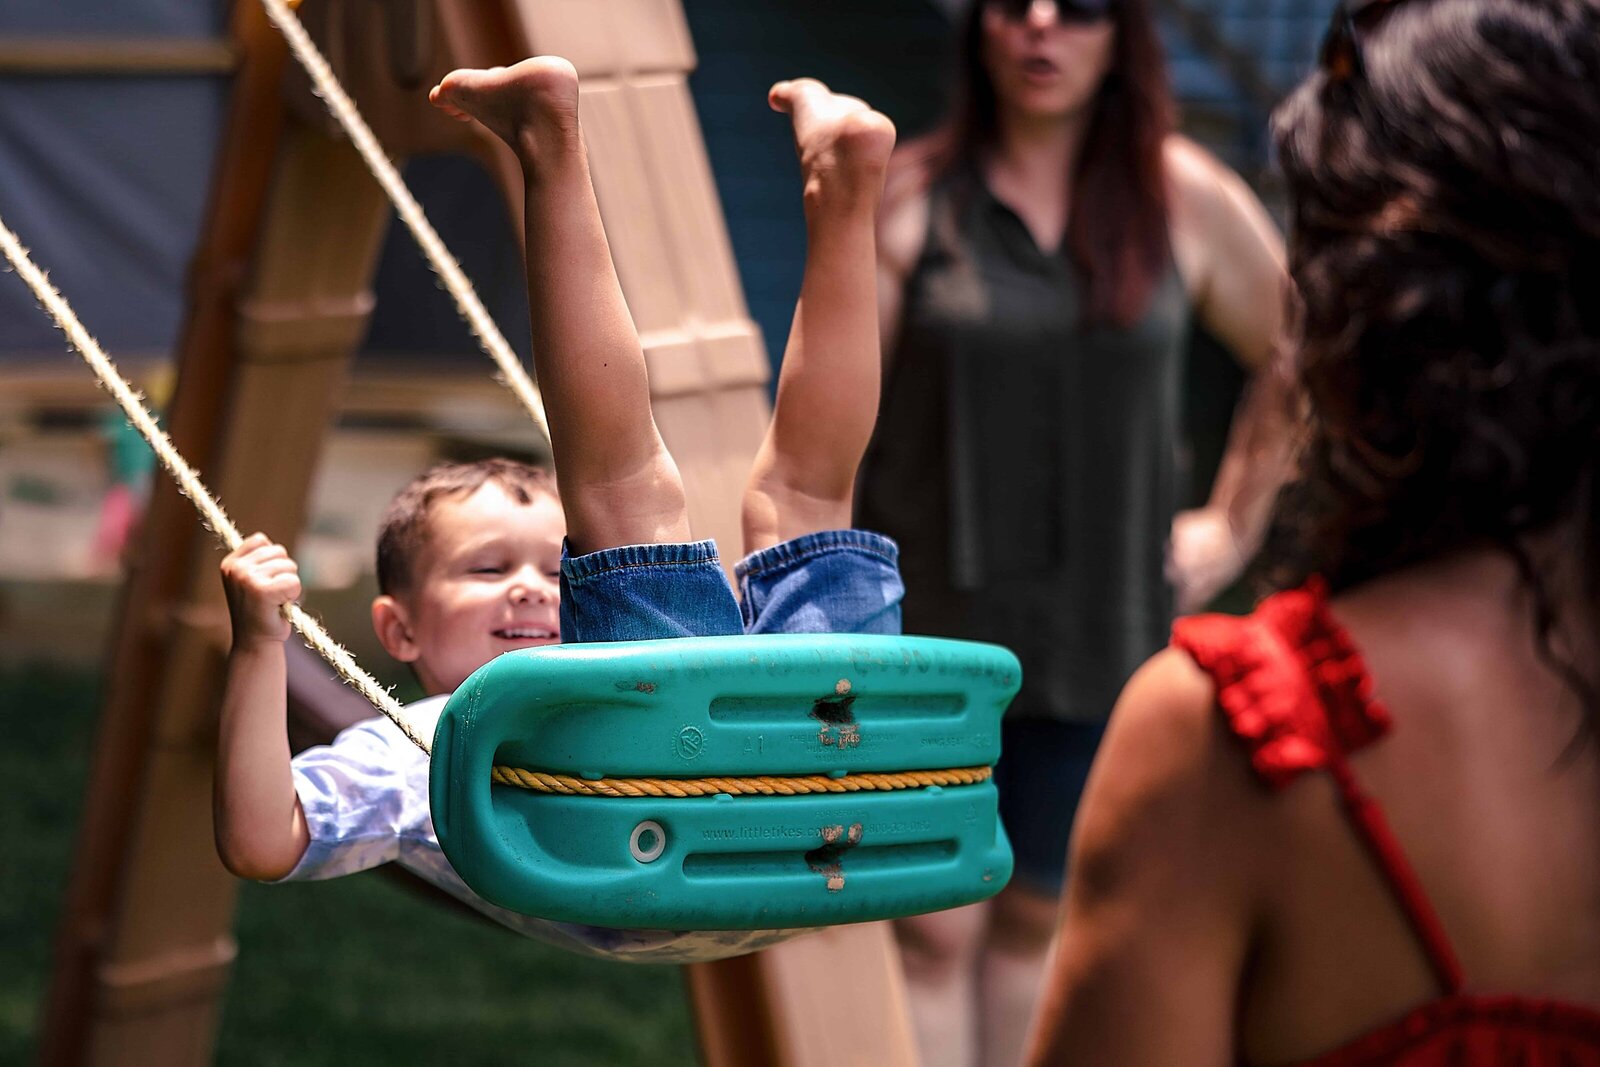 Swinging into Joy Connecticut's Outdoor Family Fun